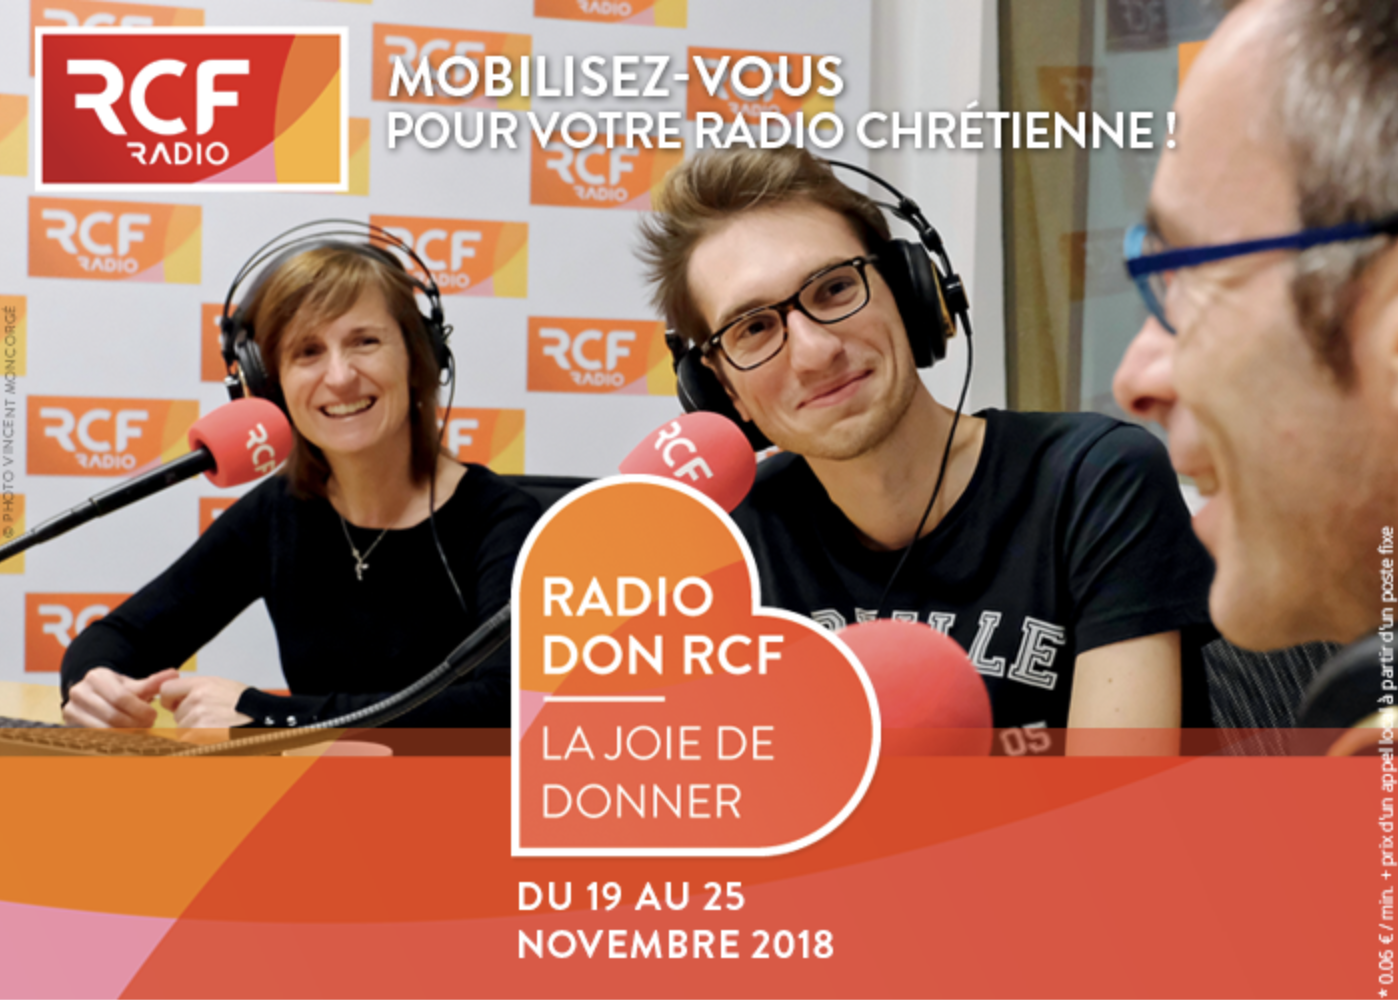 RCF organise son 10e Radio Don du 19 au 25 novembre